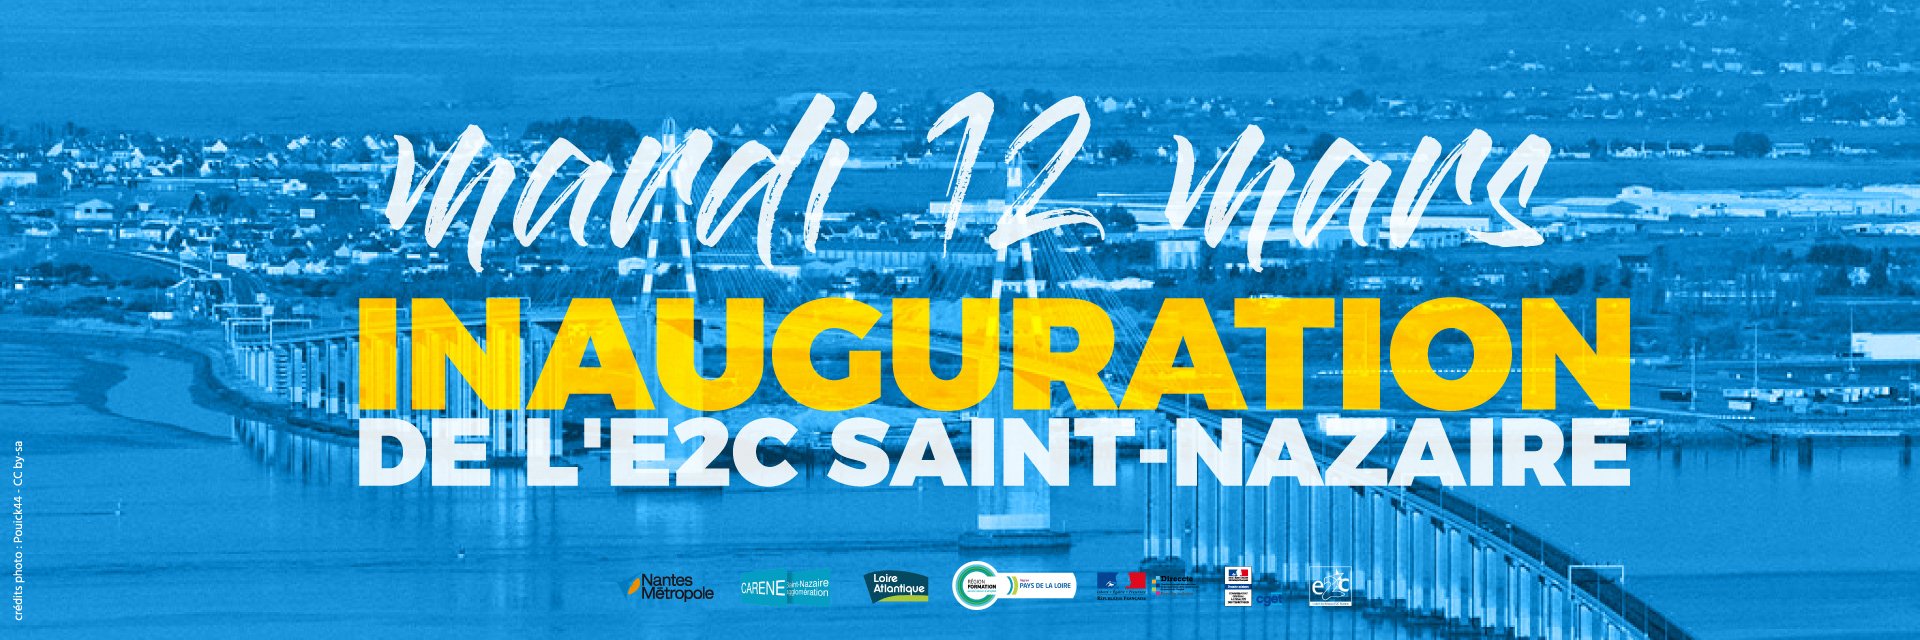 inauguration e2c saint-nazaire